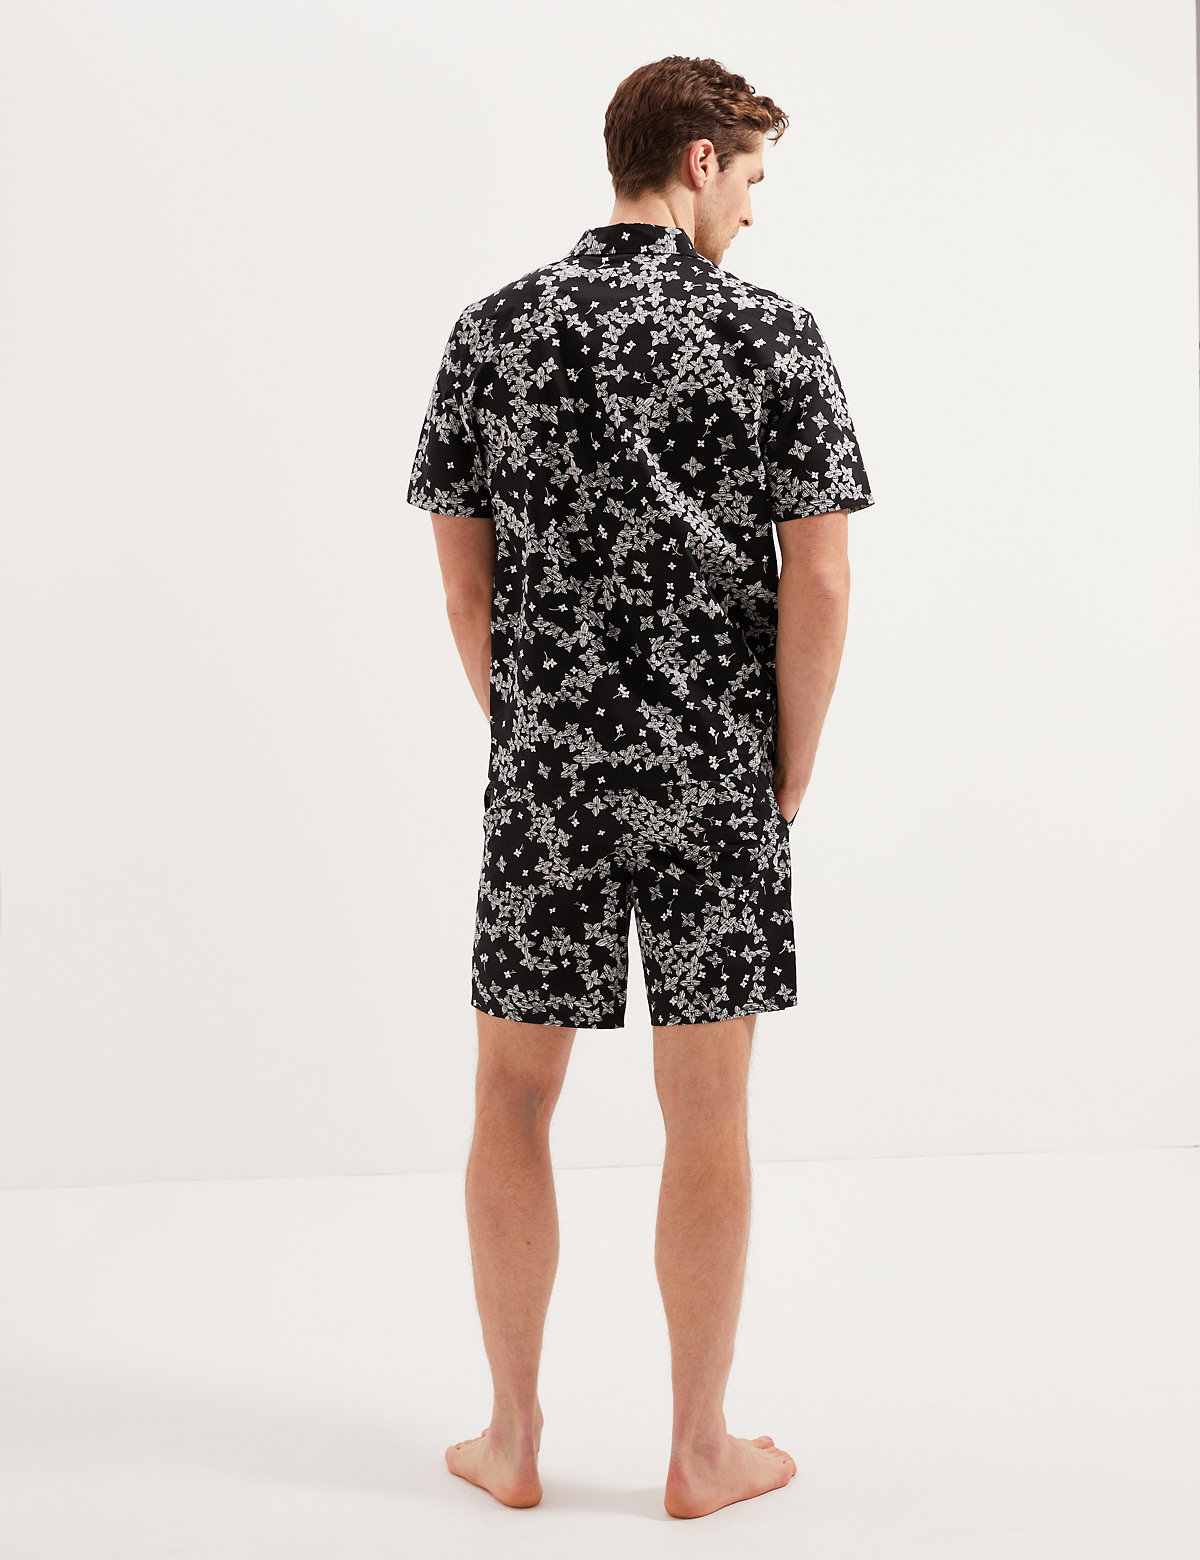 Cotton Rich Floral Print Pyjama Shorts